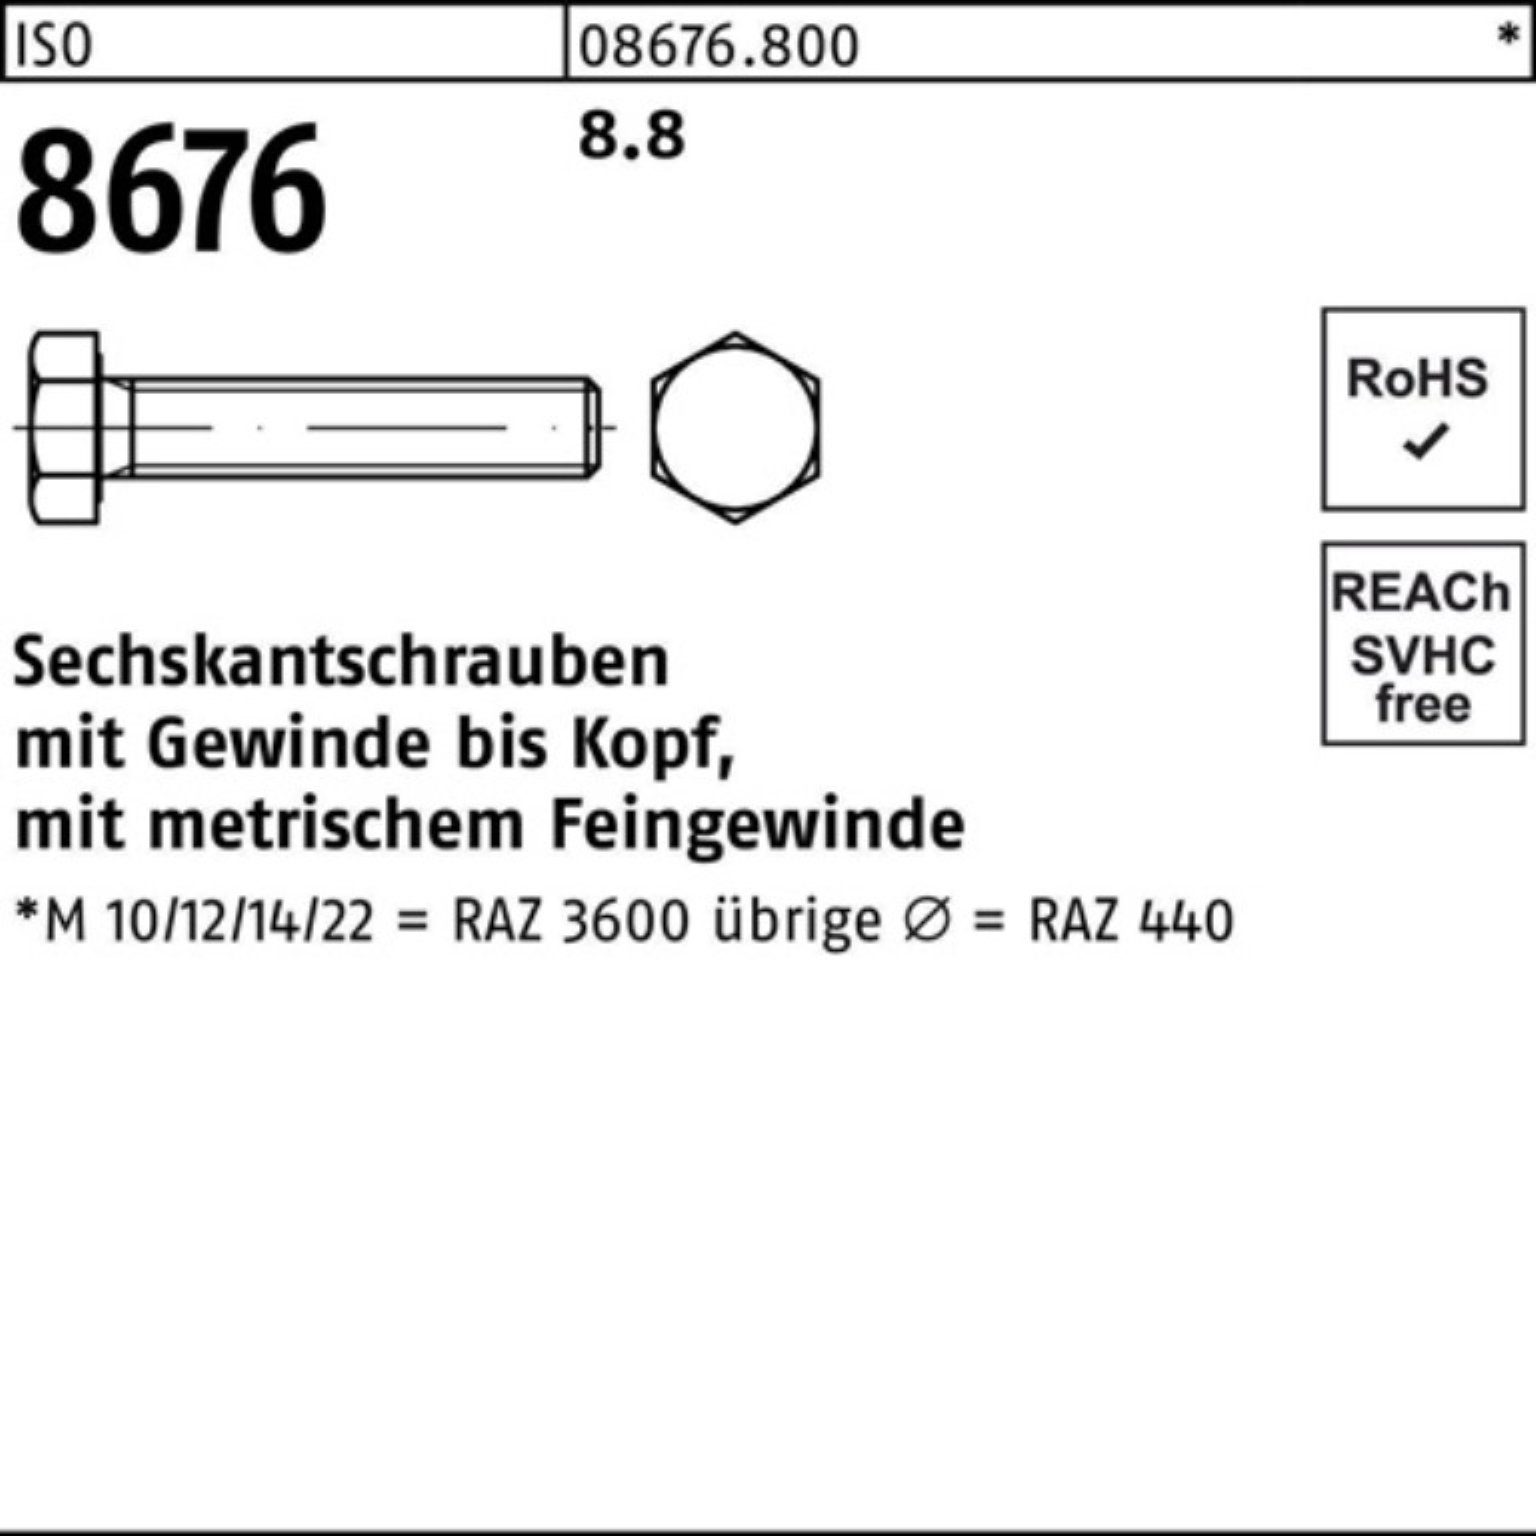 Reyher Sechskantschraube 100er Sechskantschraube 8.8 8676 Stück 50 ISO ISO M10x1x 100 VG Pack